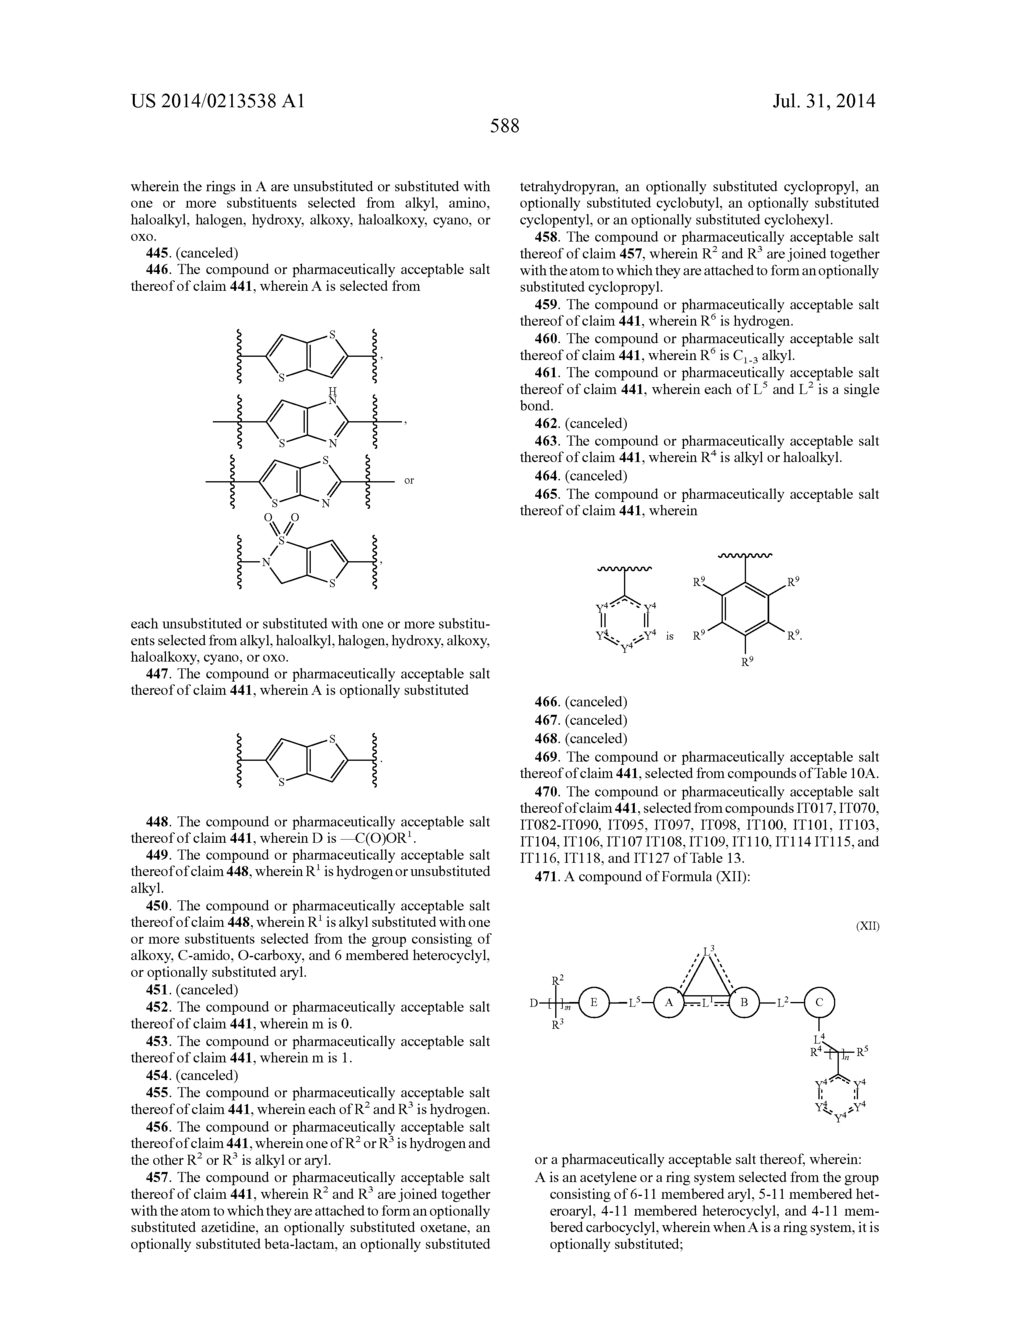 LYSOPHOSPHATIDIC ACID RECEPTOR ANTAGONISTS - diagram, schematic, and image 589